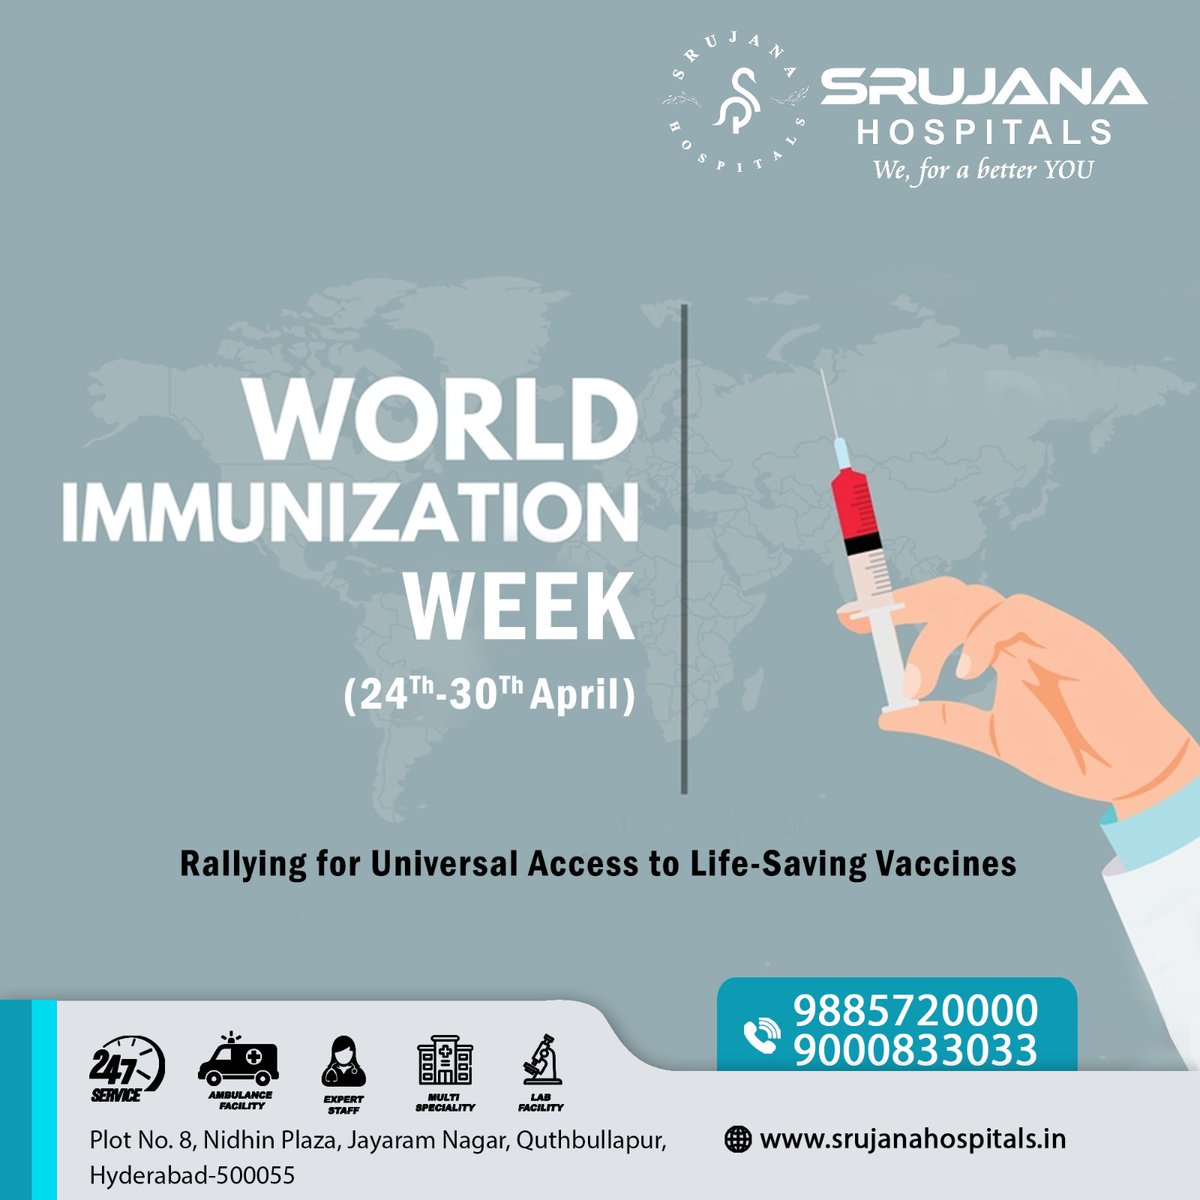 Protecting lives, one shot at a time. Celebrating
World Immunization Week.

#WorldImmunizationWeek #VaccinesSaveLives #GetVaccinated #ImmunizeForLife #ProtectWithVax #HealthyCommunities #PreventDisease #GlobalHealth #PublicHealth #Srujanahospitals